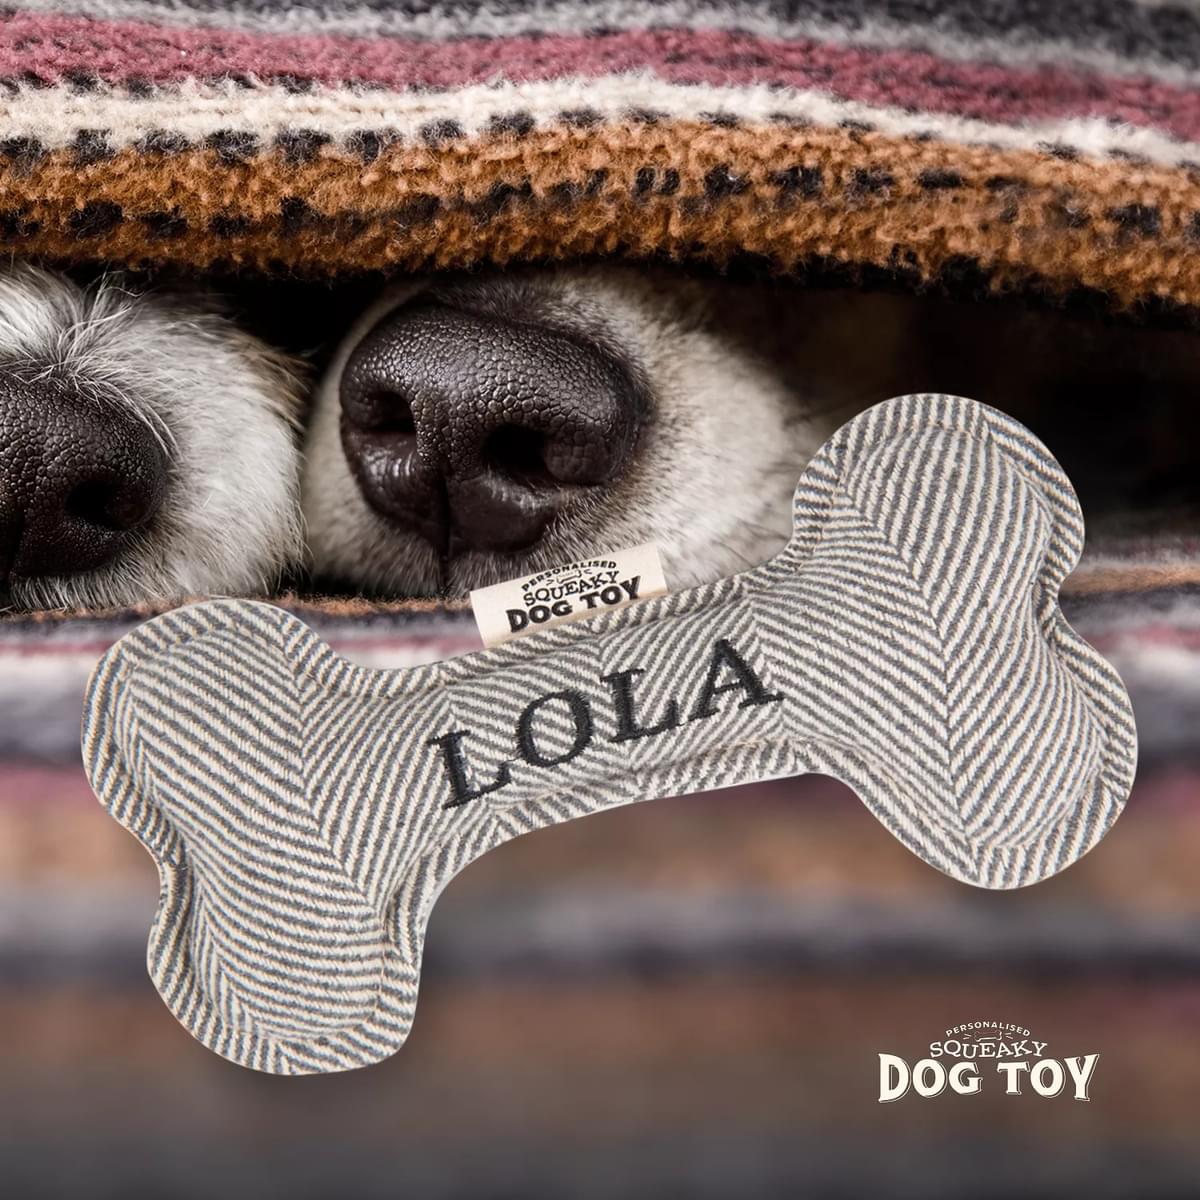 Named Squeaky Dog Toy- Lola. Bone shaped herringbone tweed pattern dog toy. 